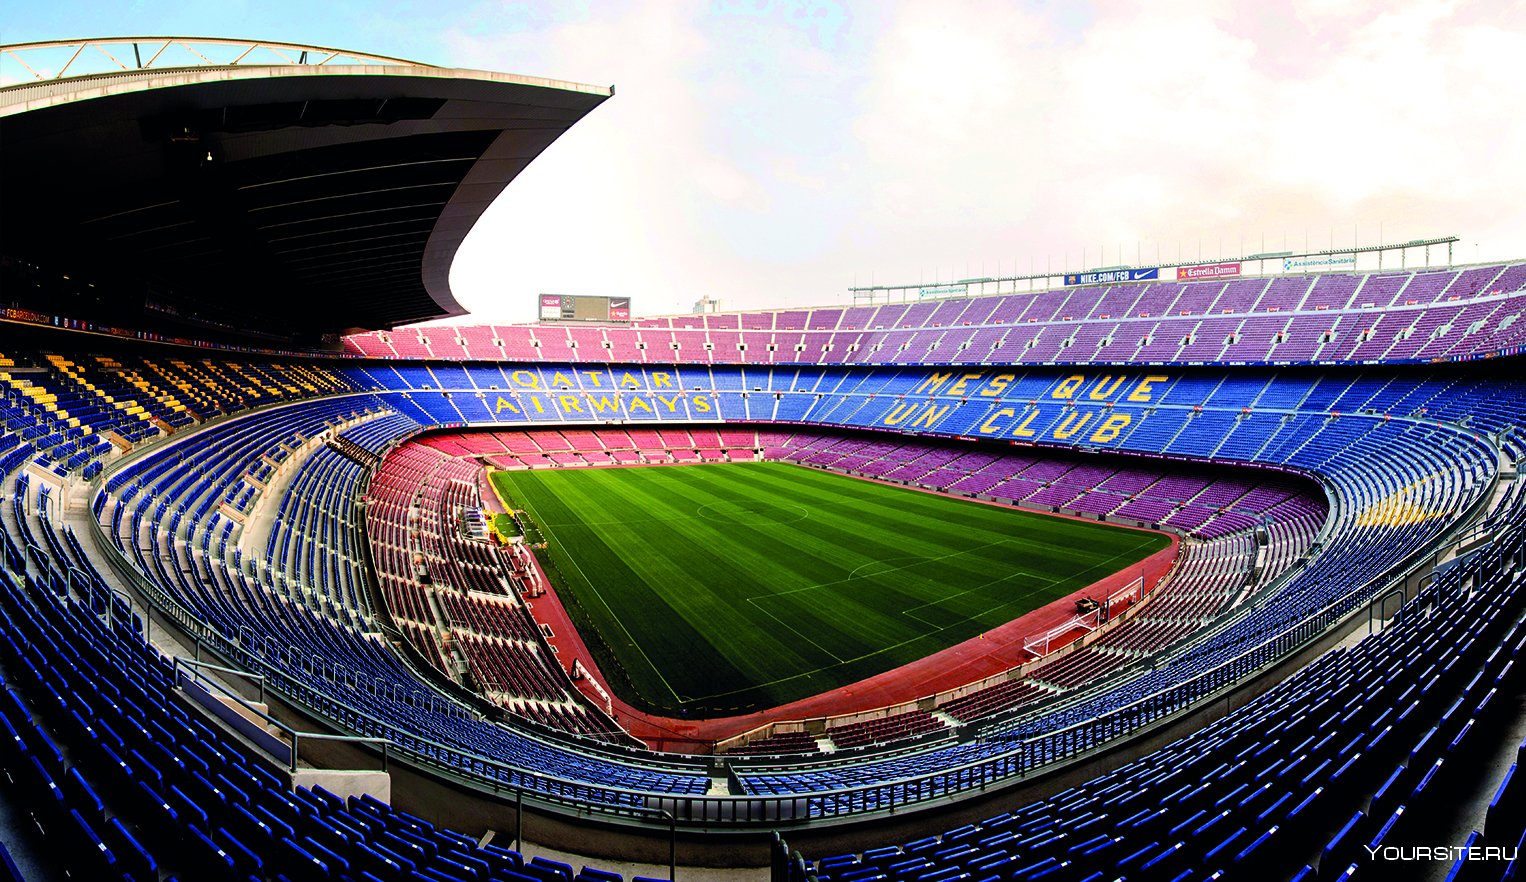 Вместимость камп. Стадион Camp nou. Барселона Камп ноу. Стадион Камп ноу в Барселоне. Ноу Камп" в Барселоне (84 тыс.).